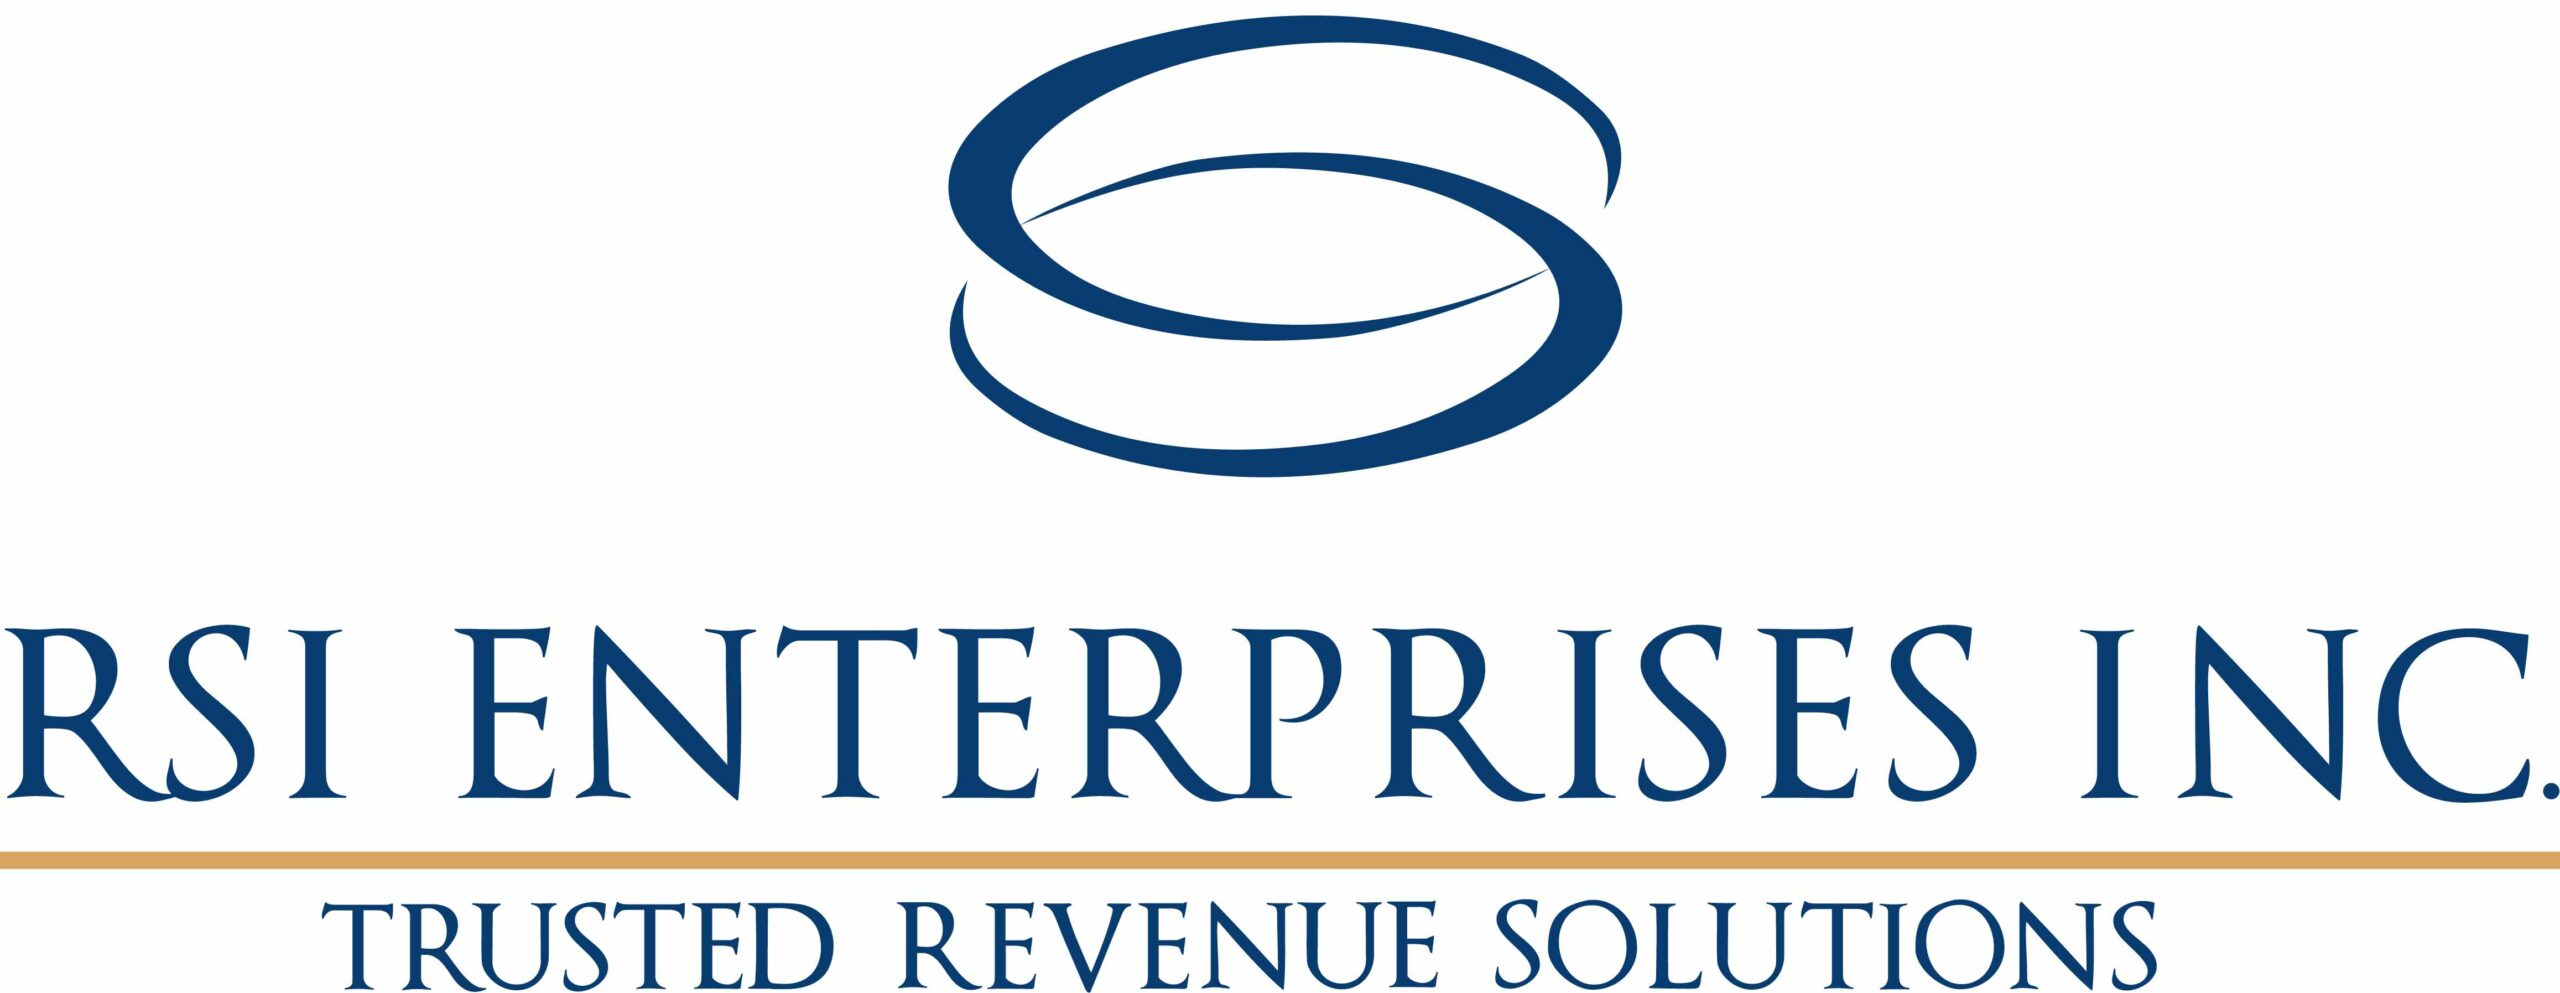 RSI Enterprises Inc